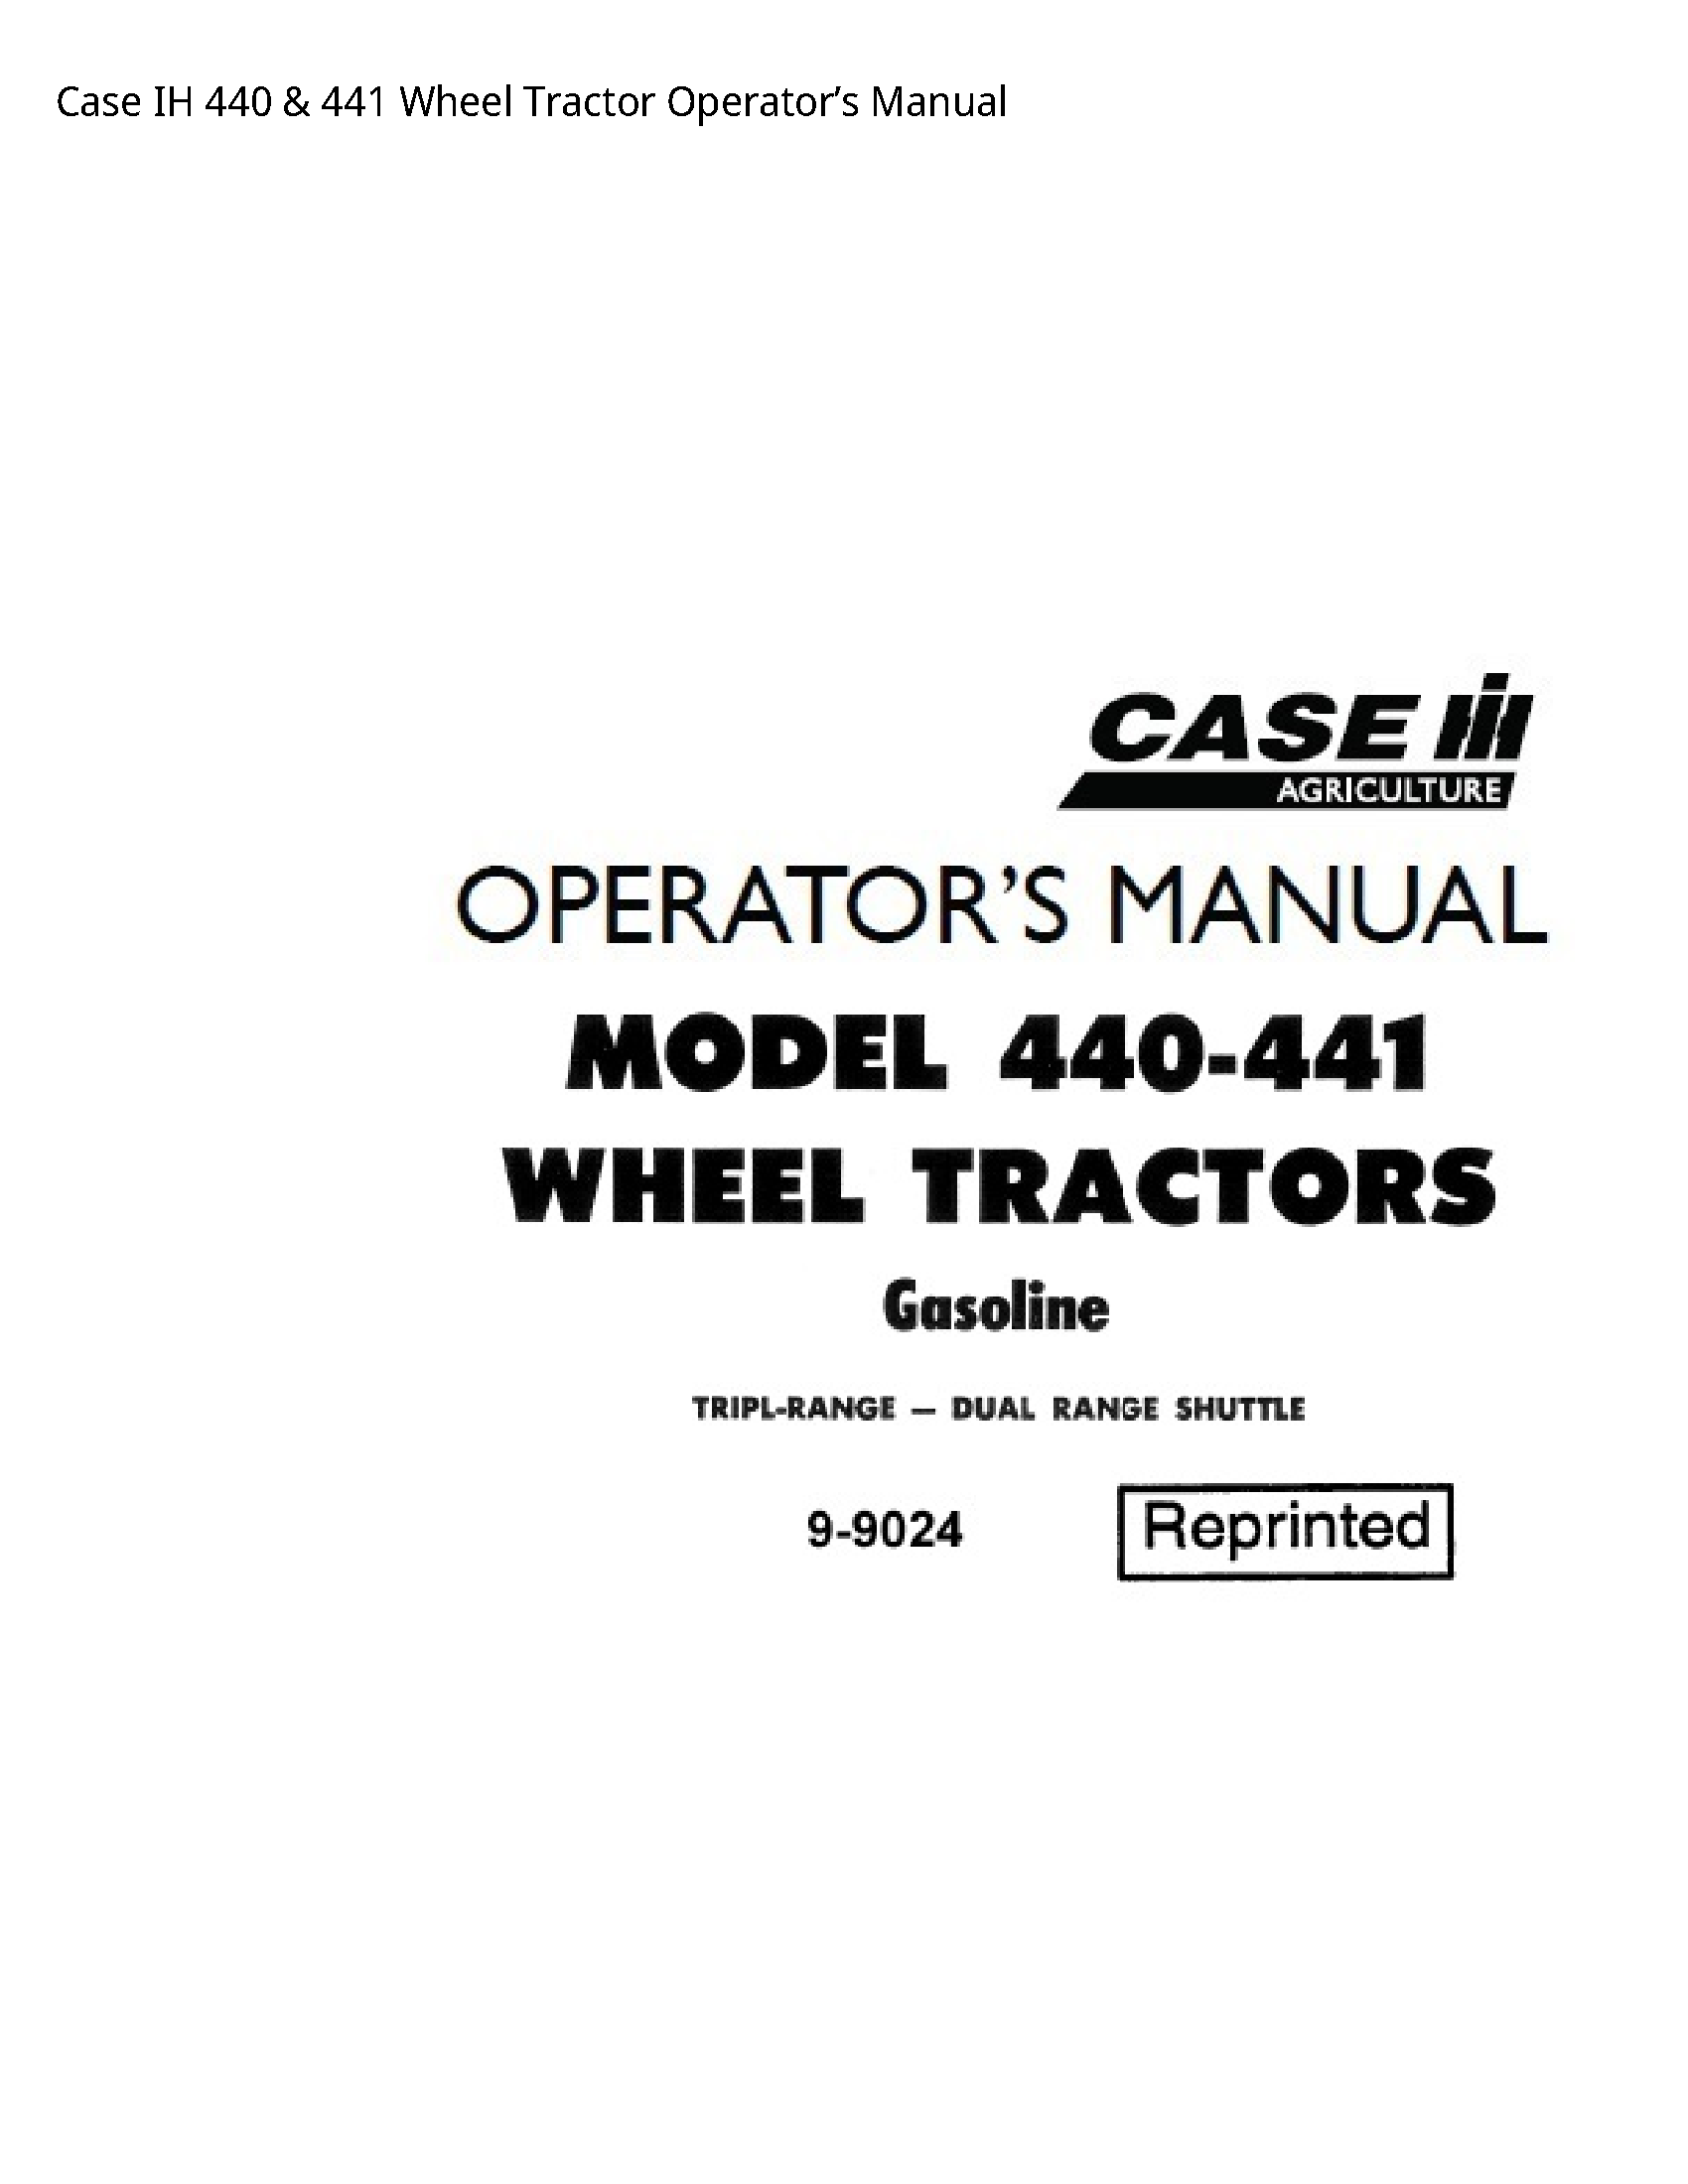 Case/Case IH 440 IH Wheel Tractor Operator’s manual